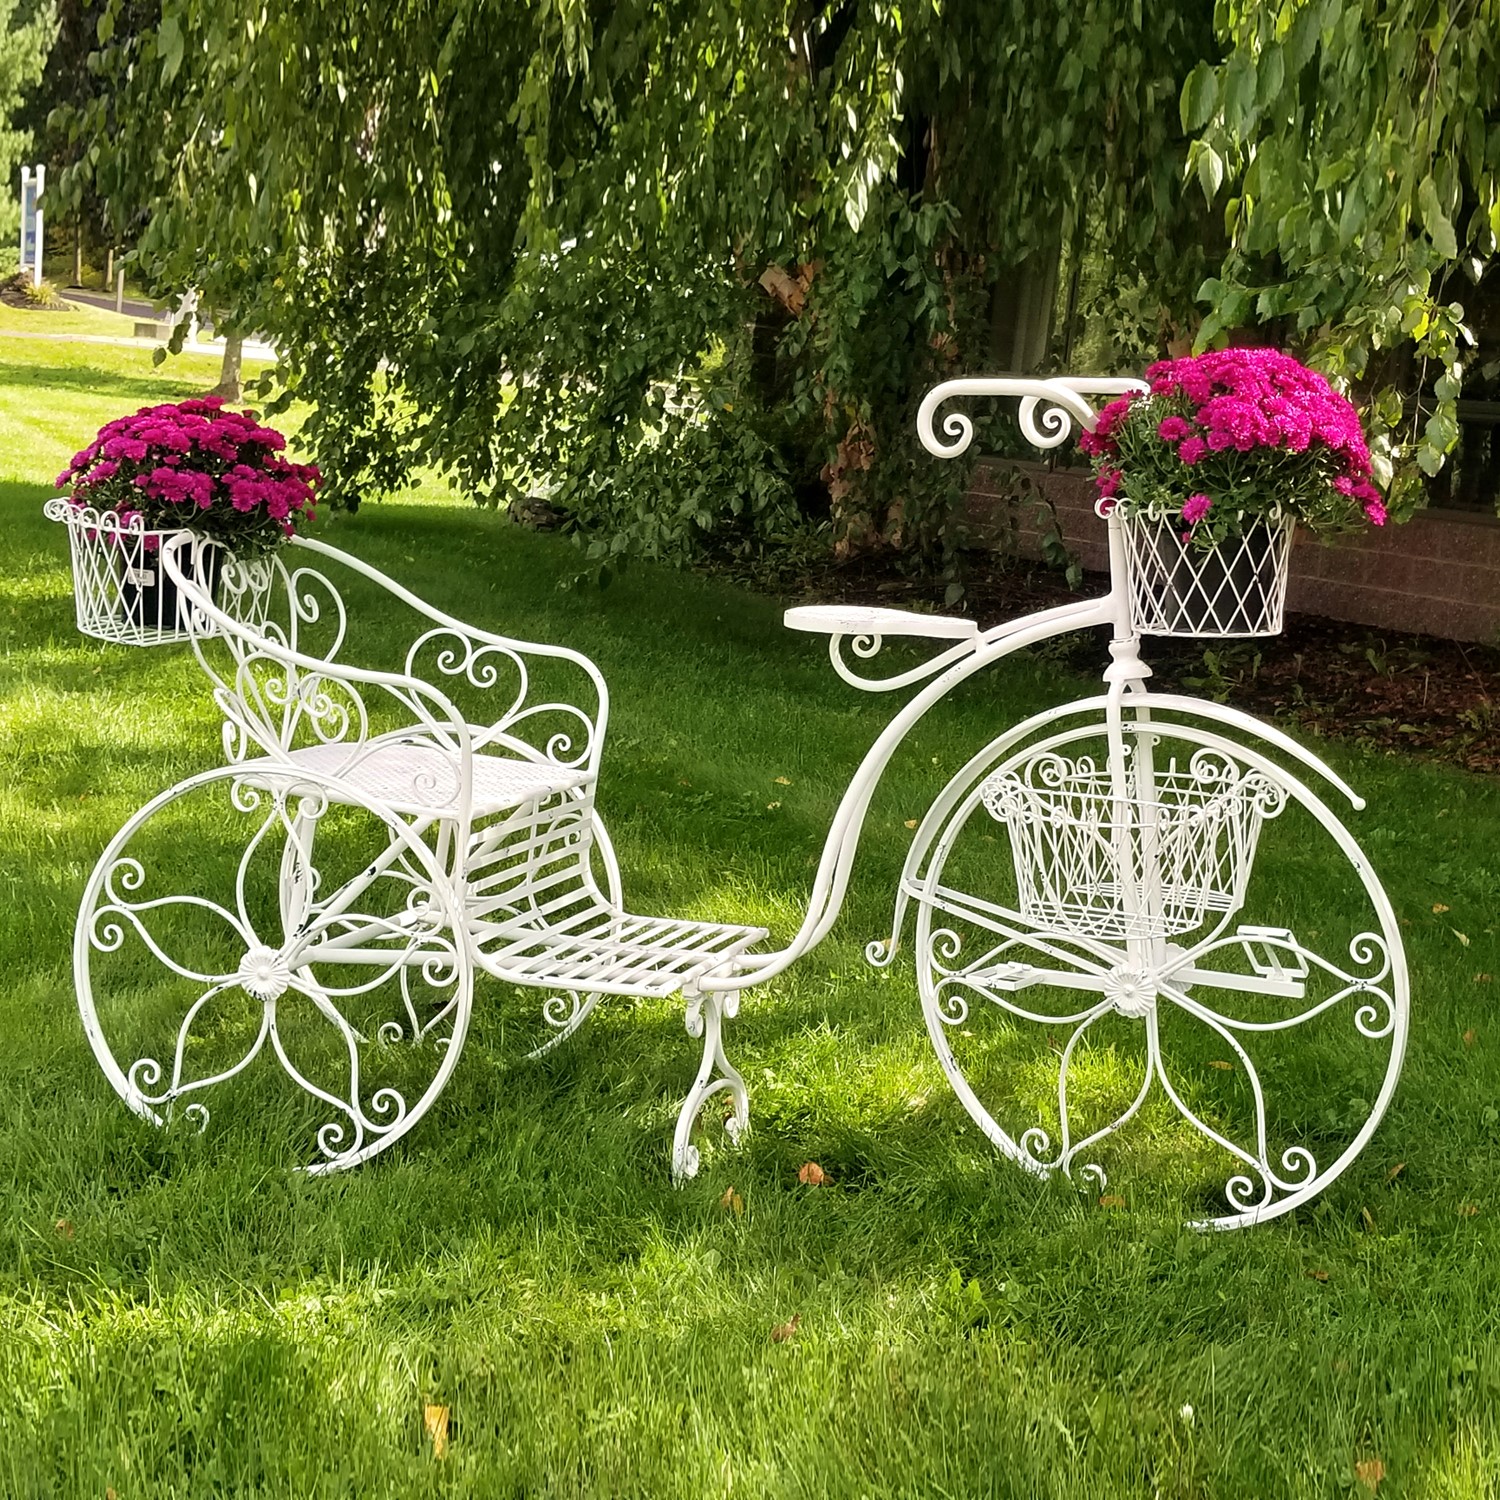 Zaer Ltd International Pre-Order: 50.5" Tall Iron Tricycle Plant Stand with Flower Baskets "Stephania" ZR170735-AW